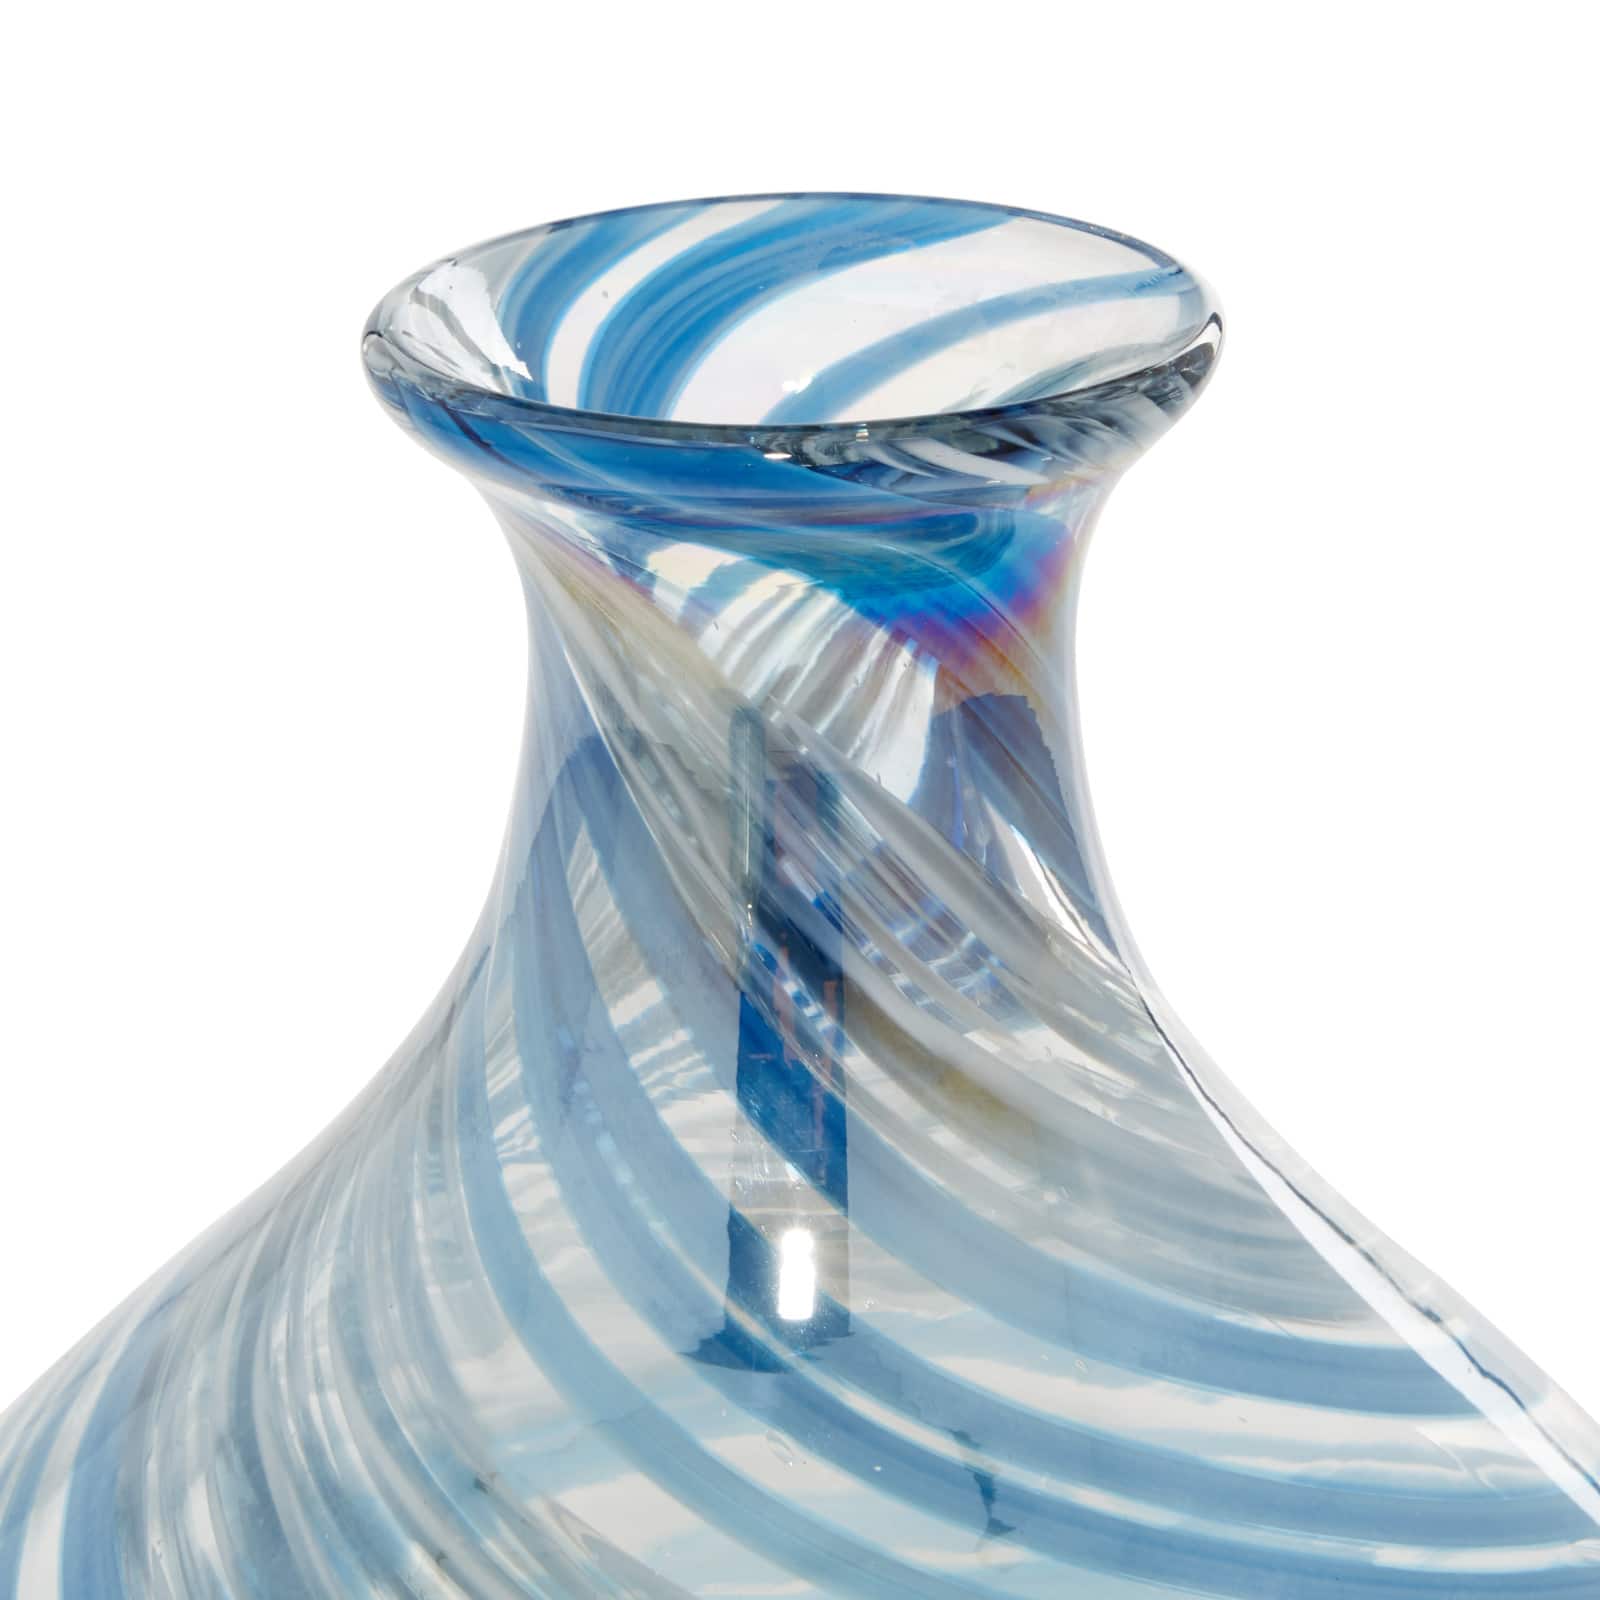 Blue Contemporary Glass Vase Set